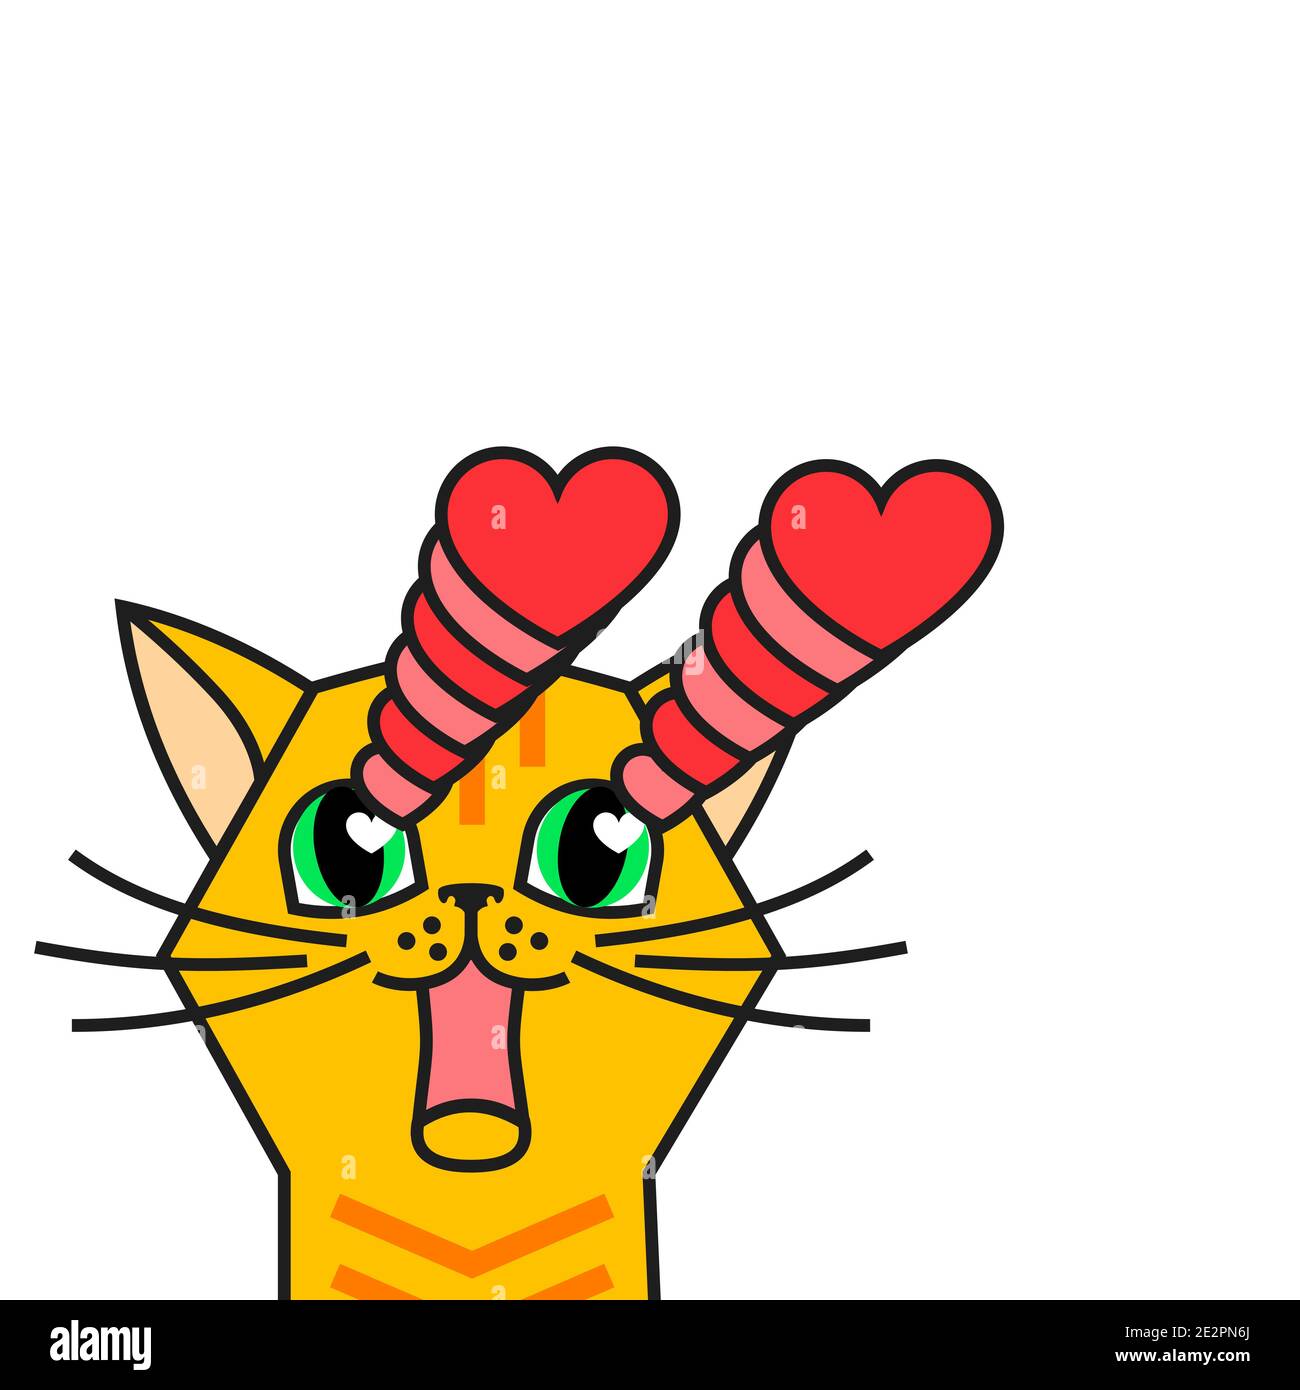 Cat in love meme sticker isolated on white Stock Vector